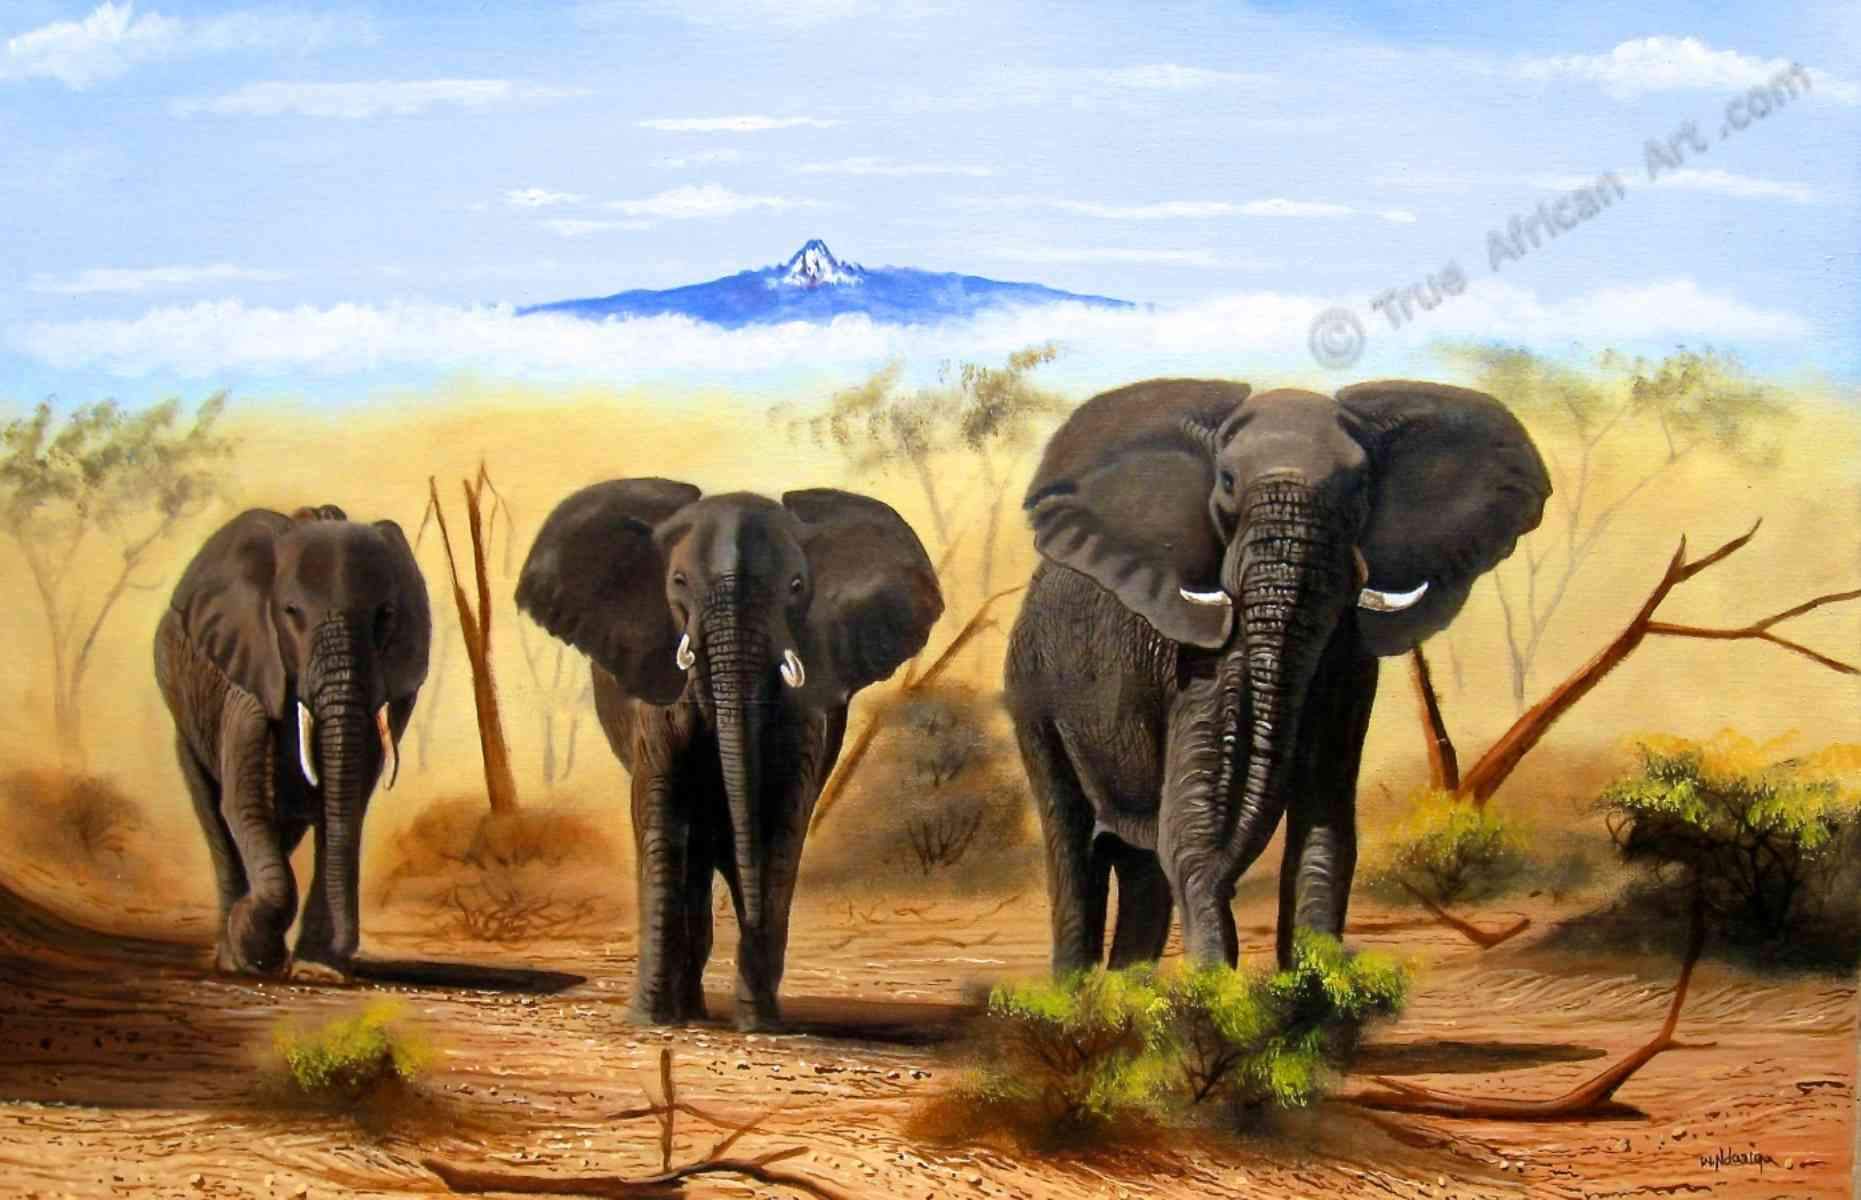 Wycliffe Ndwiga  |  Kenya  |  Three Elephants  |  Print  |  True African Art .com